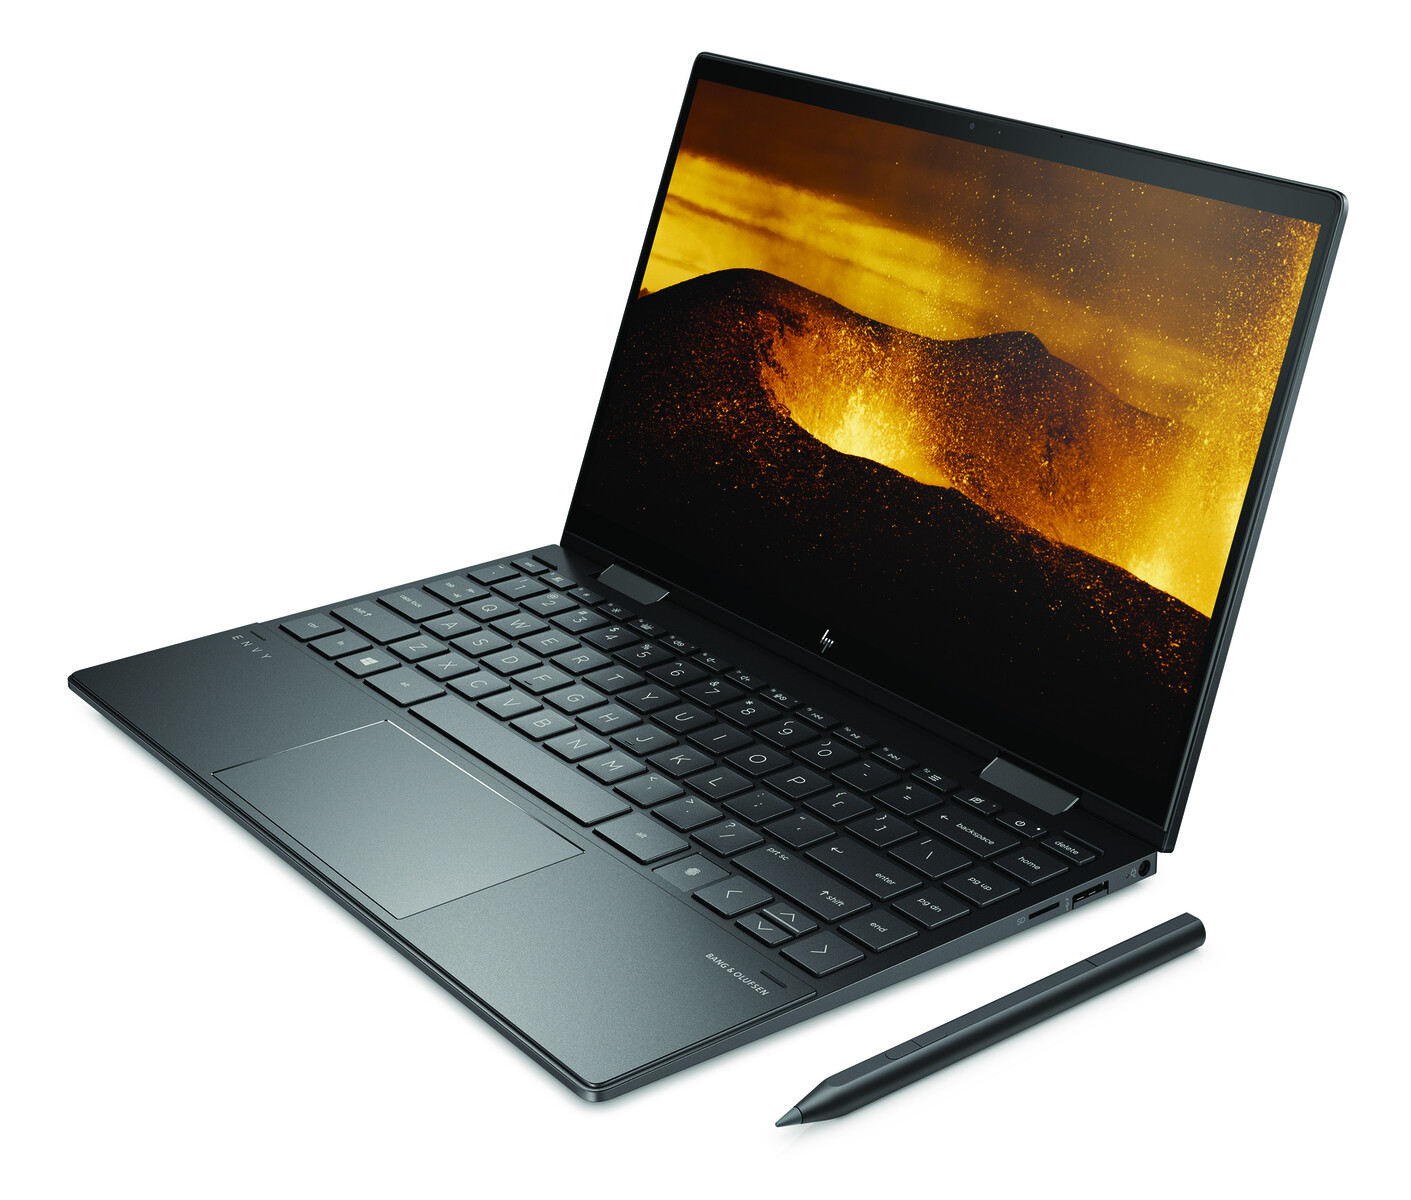 HP Envy x360 13-ay Series - Notebookcheck.net External Reviews